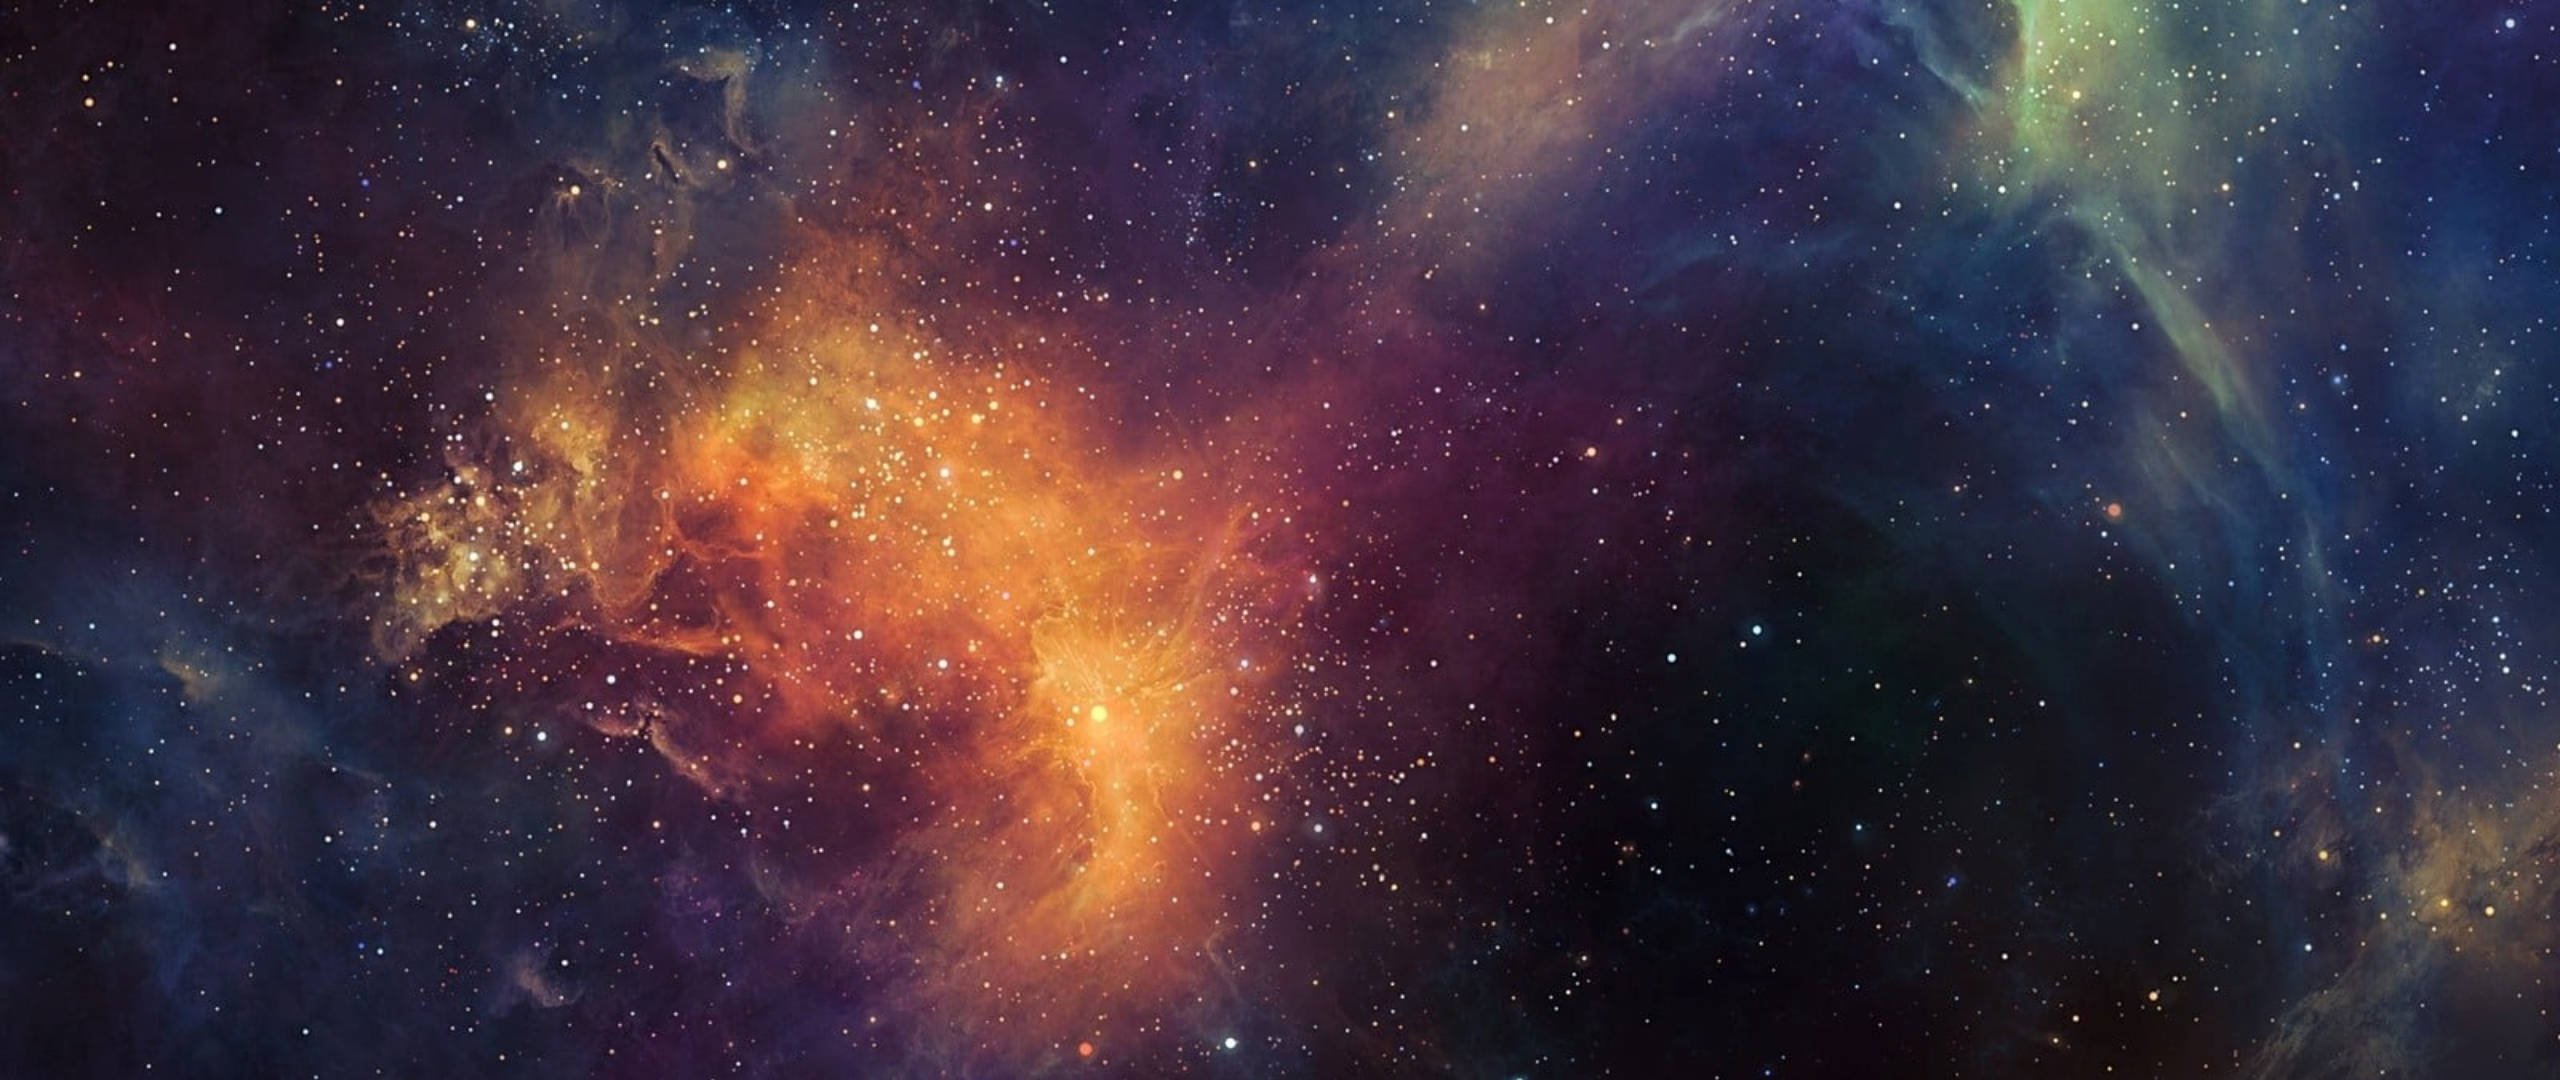 Black Galaxy Glowing Orange Nebula Wallpaper